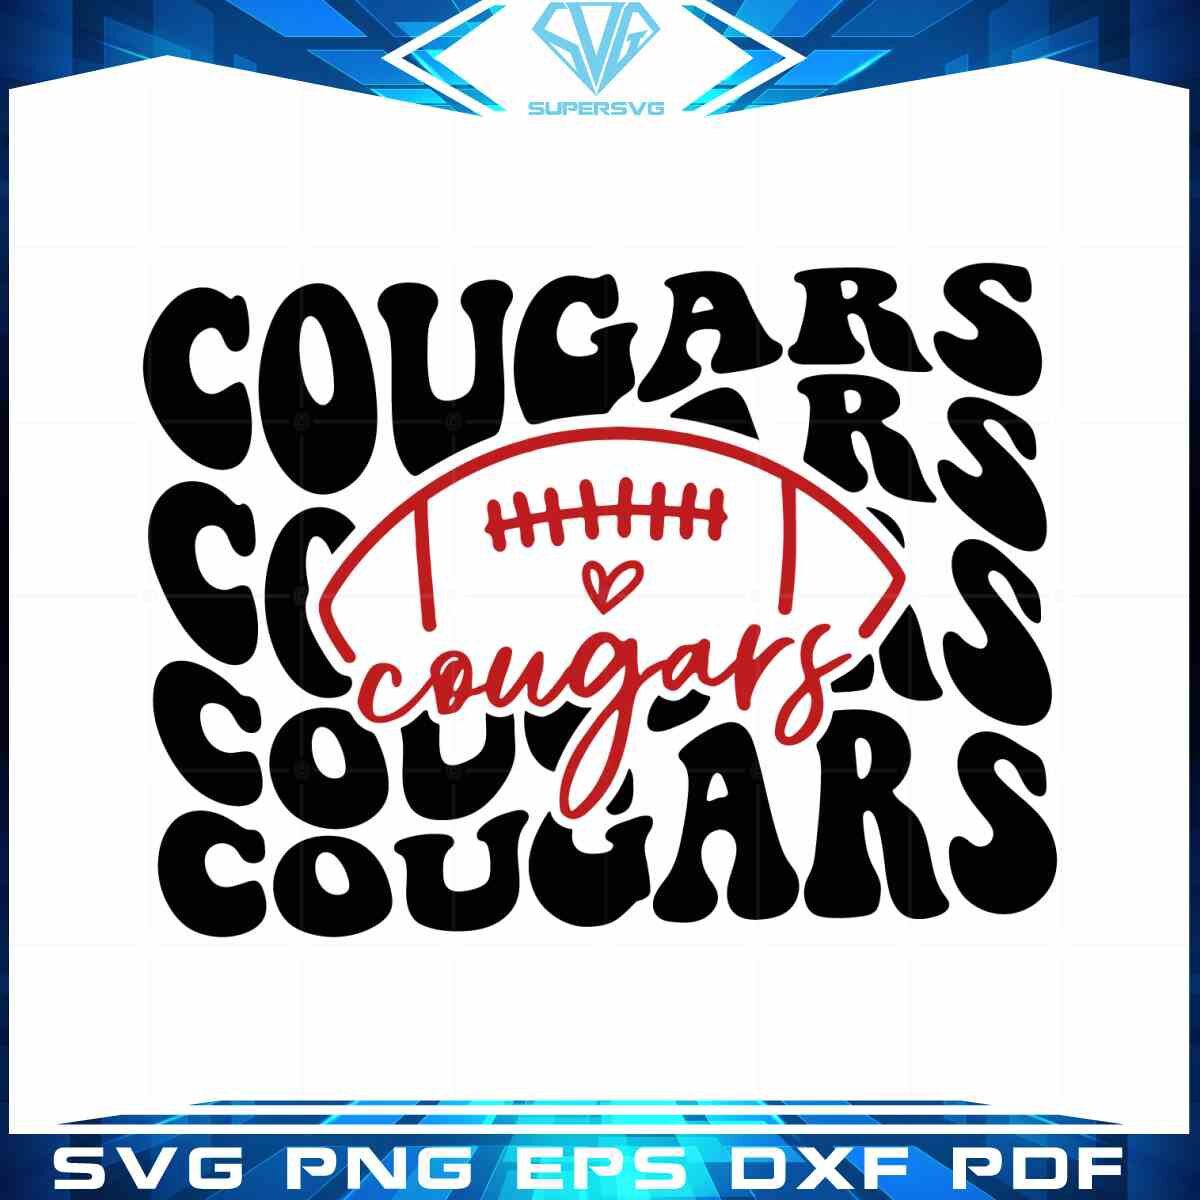 cougars-football-mascot-school-team-svg-files-silhouette-diy-craft